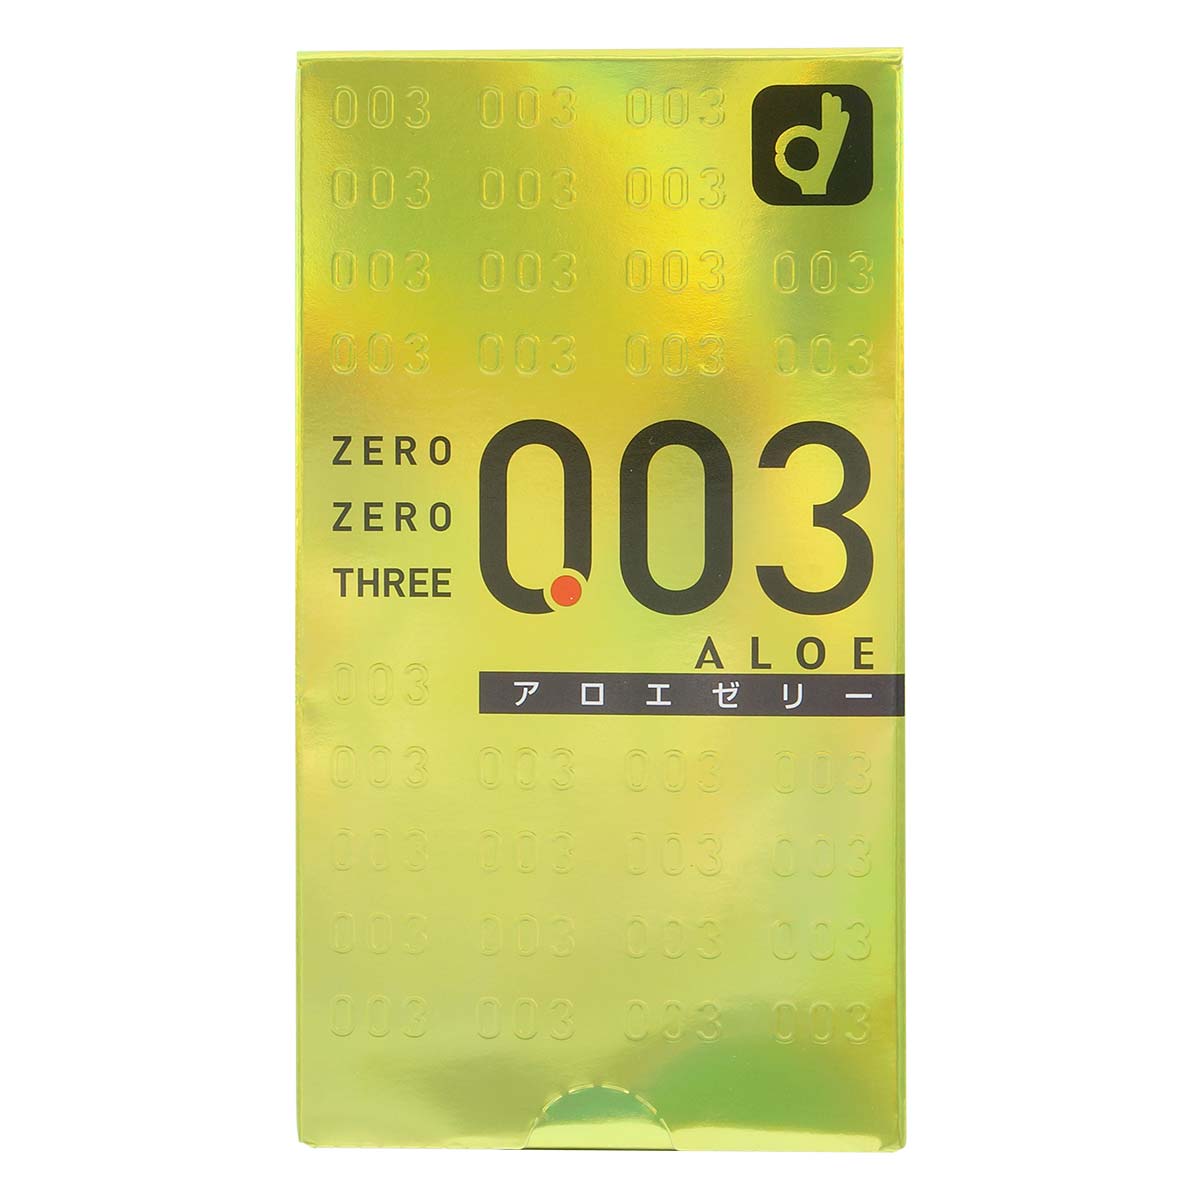 Zero Zero Three 0.03 Aloe (Japan Edition) 10's Pack Latex Condom-p_2